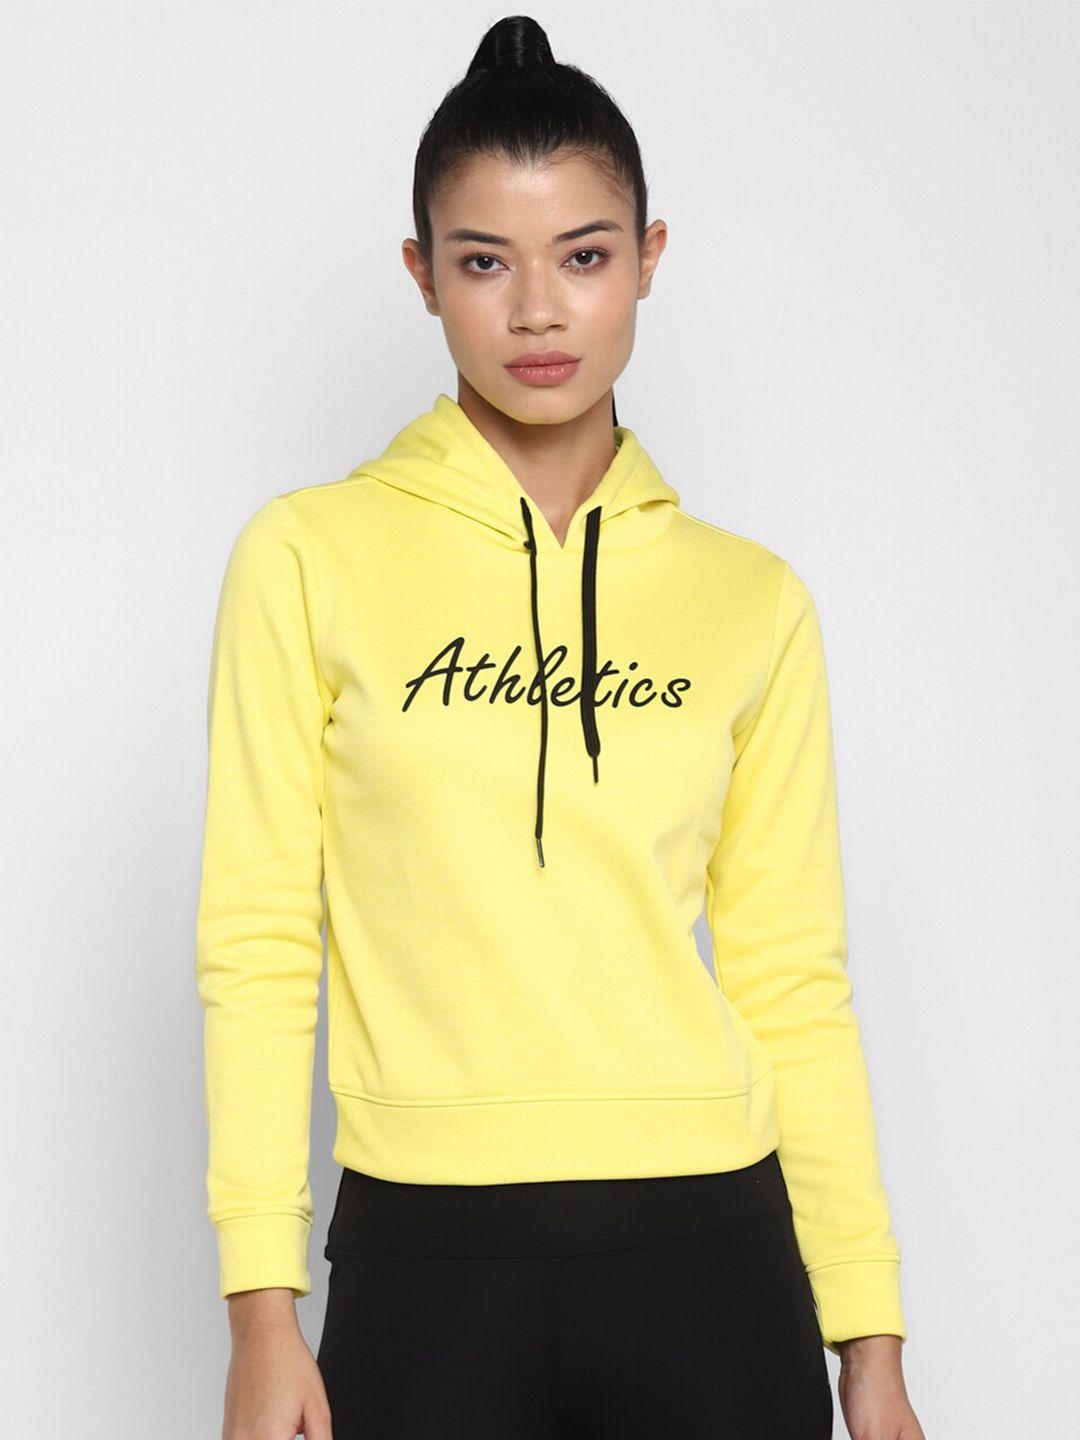 off-limits-women-yellow-hooded-sweatshirt